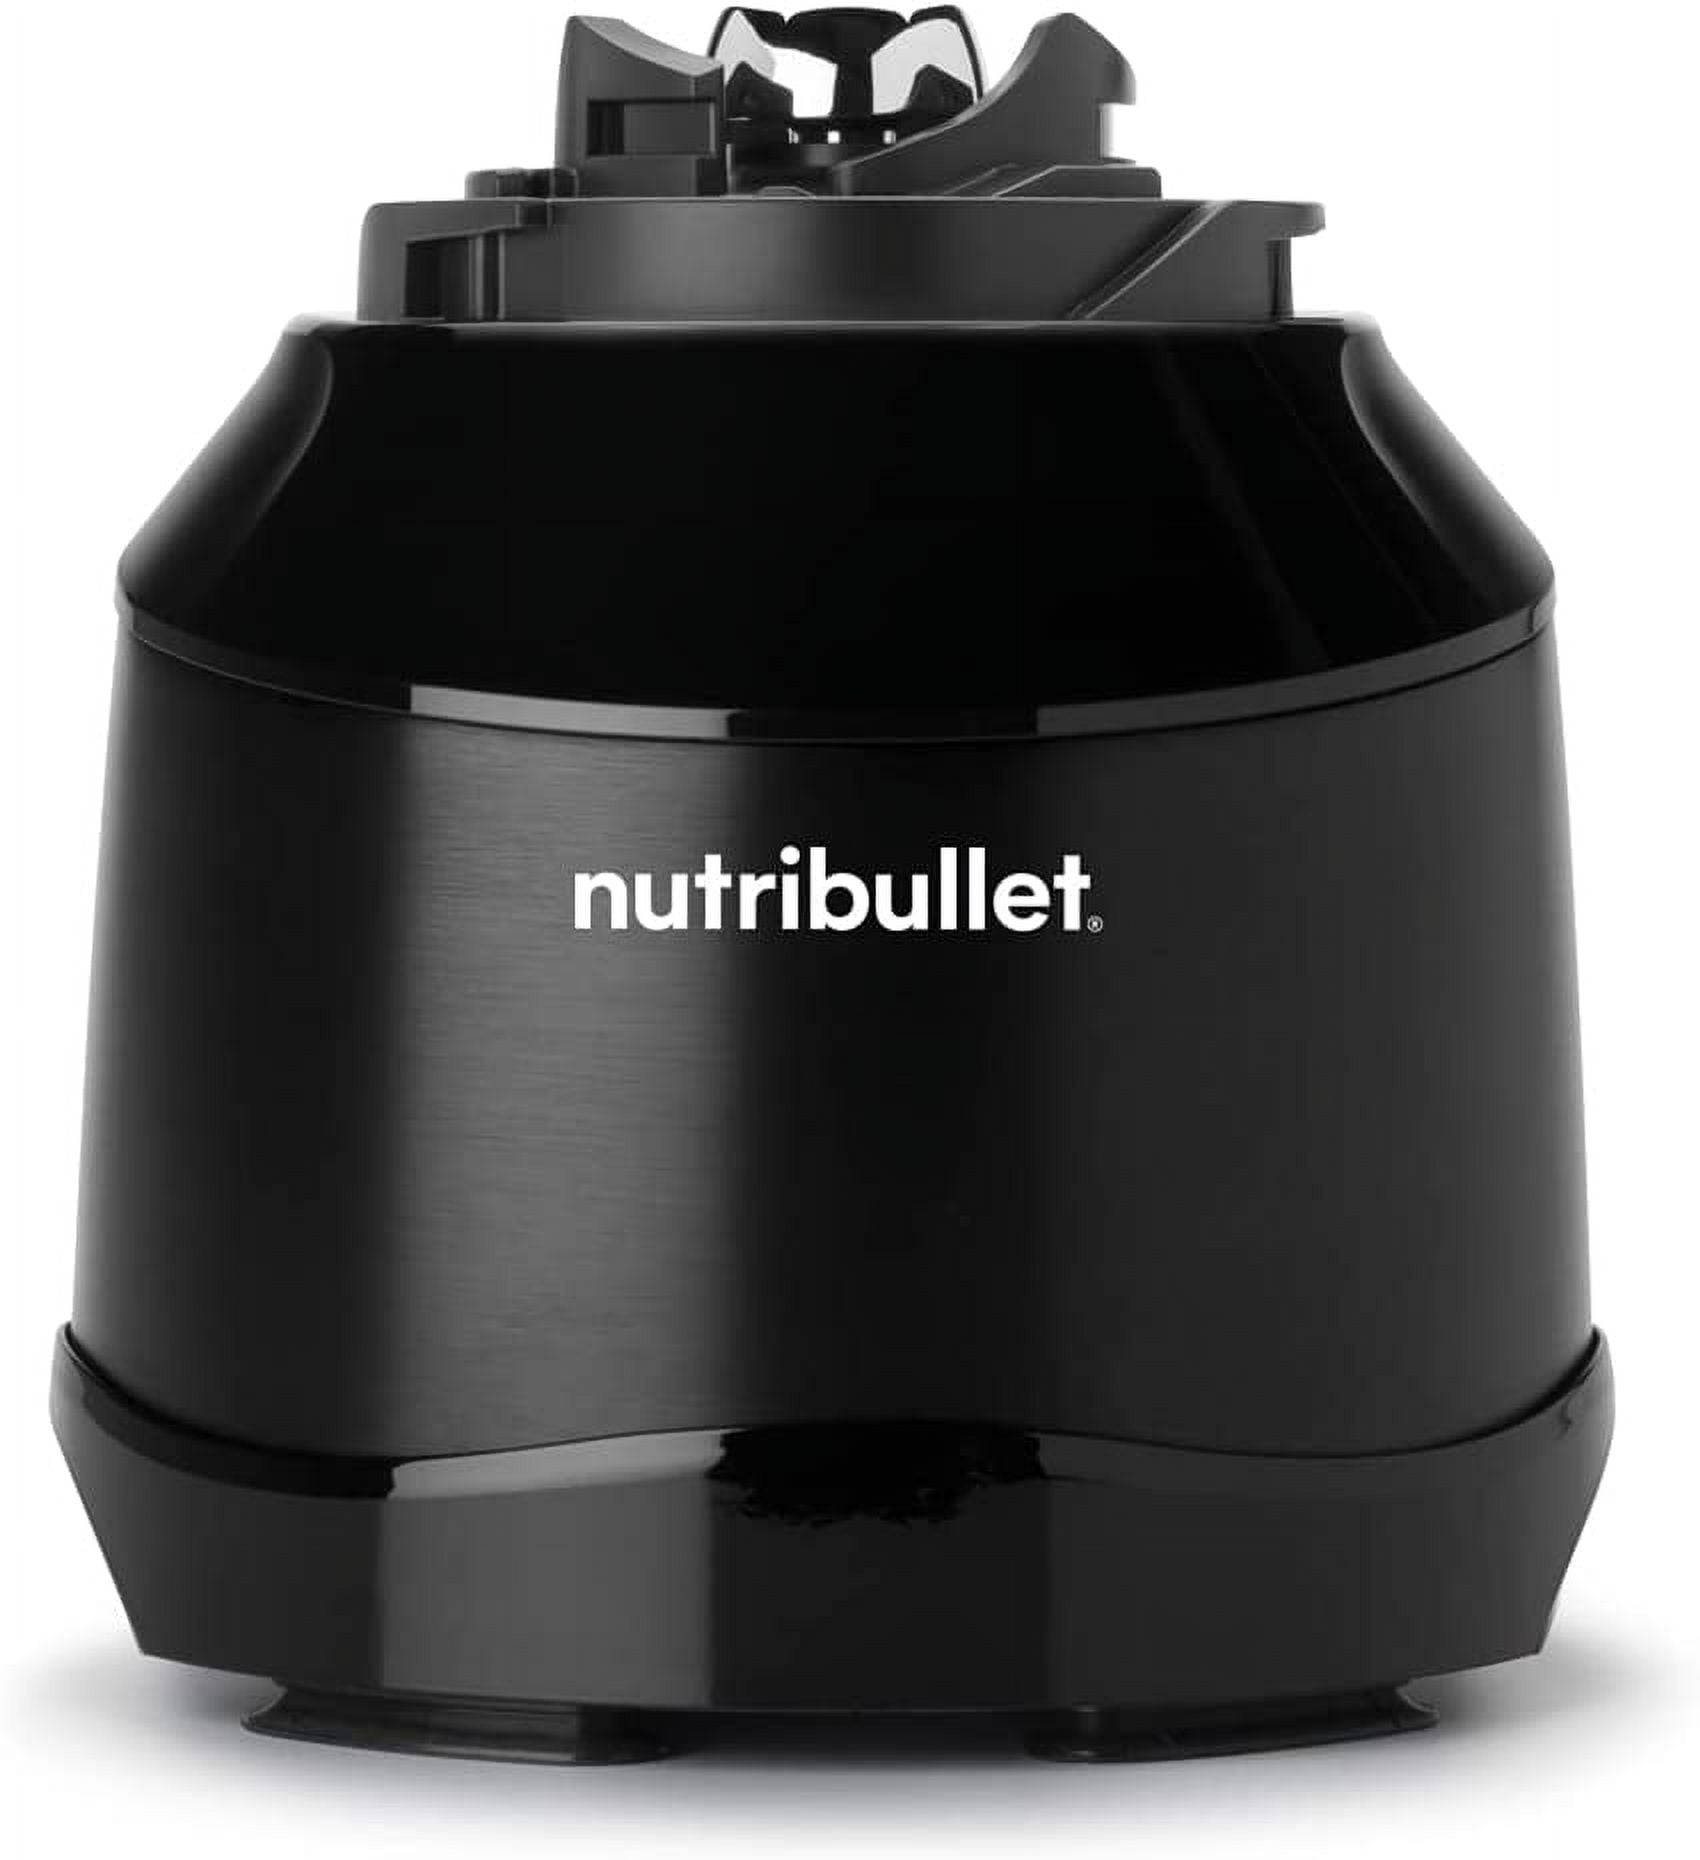 How to use nutribullet smart touch blender｜TikTok Search